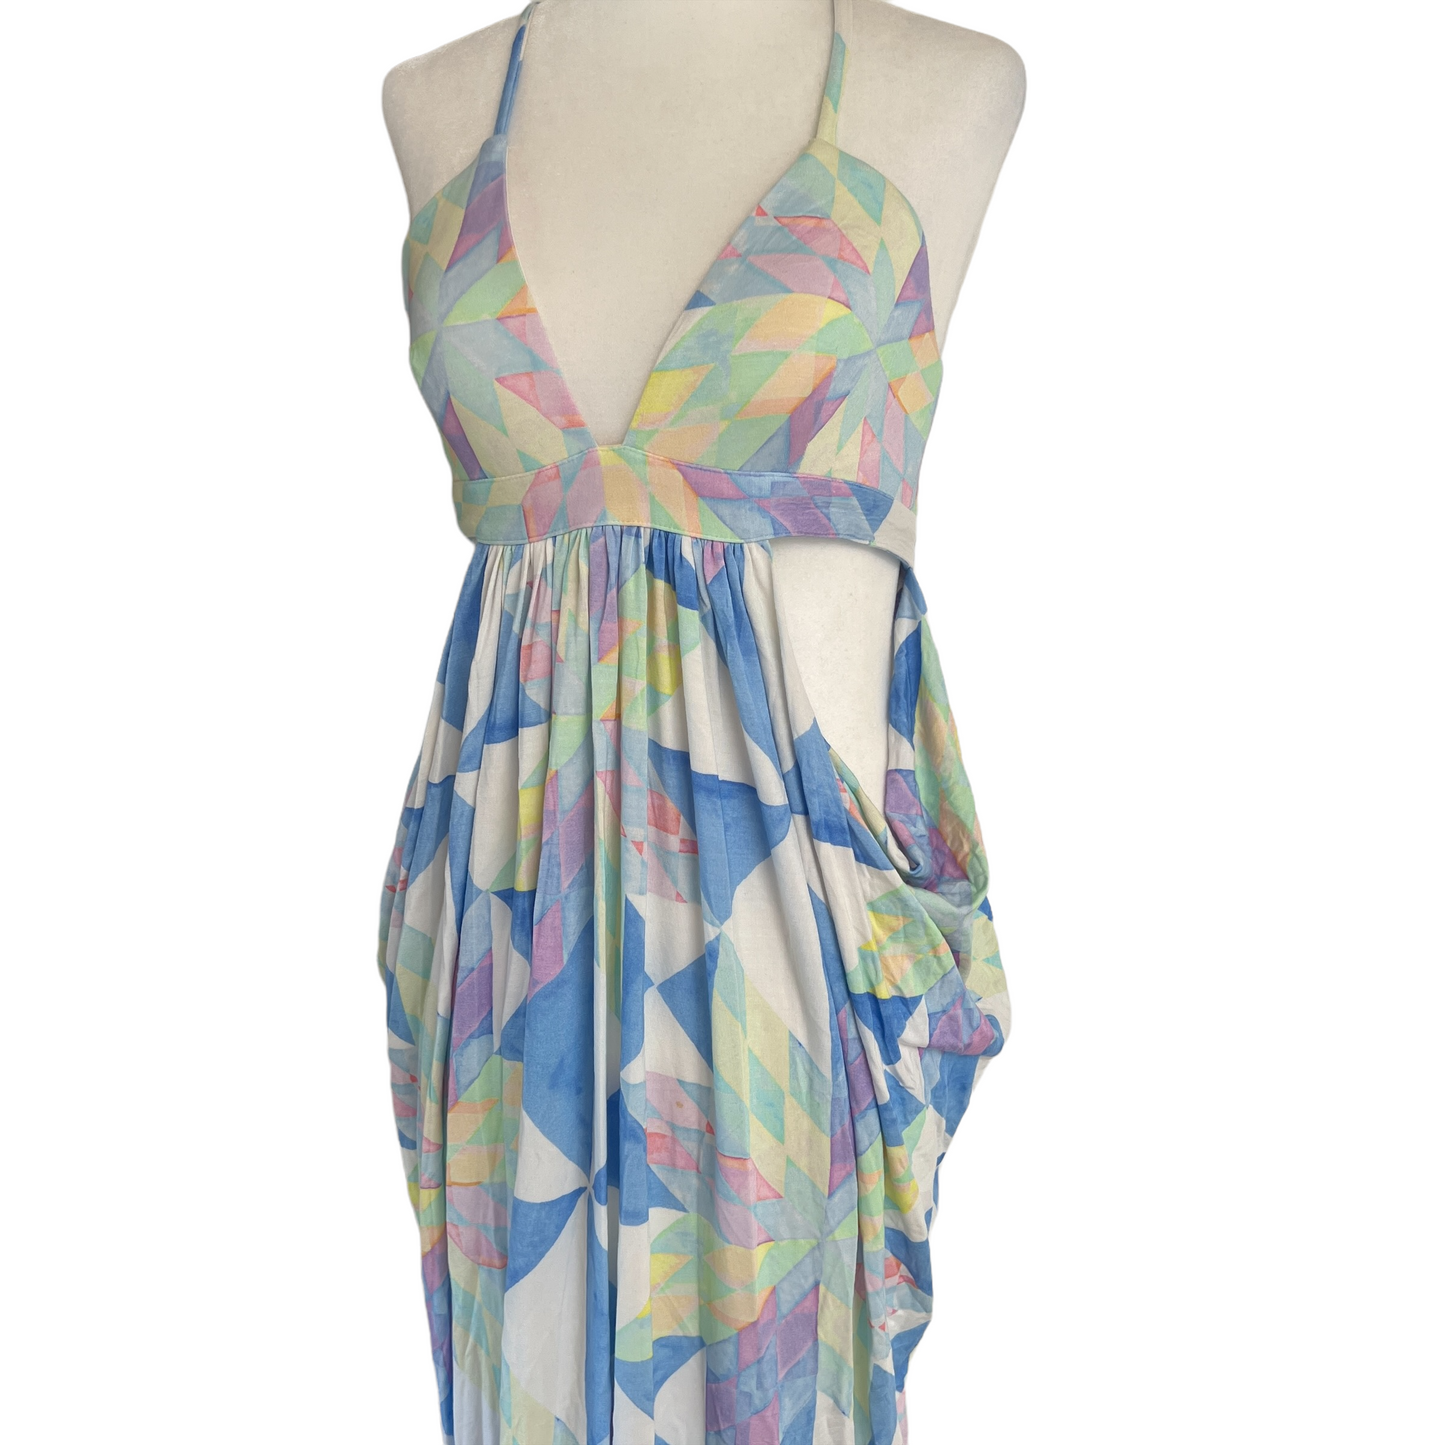 Vintage Pastel Beach Dress - M